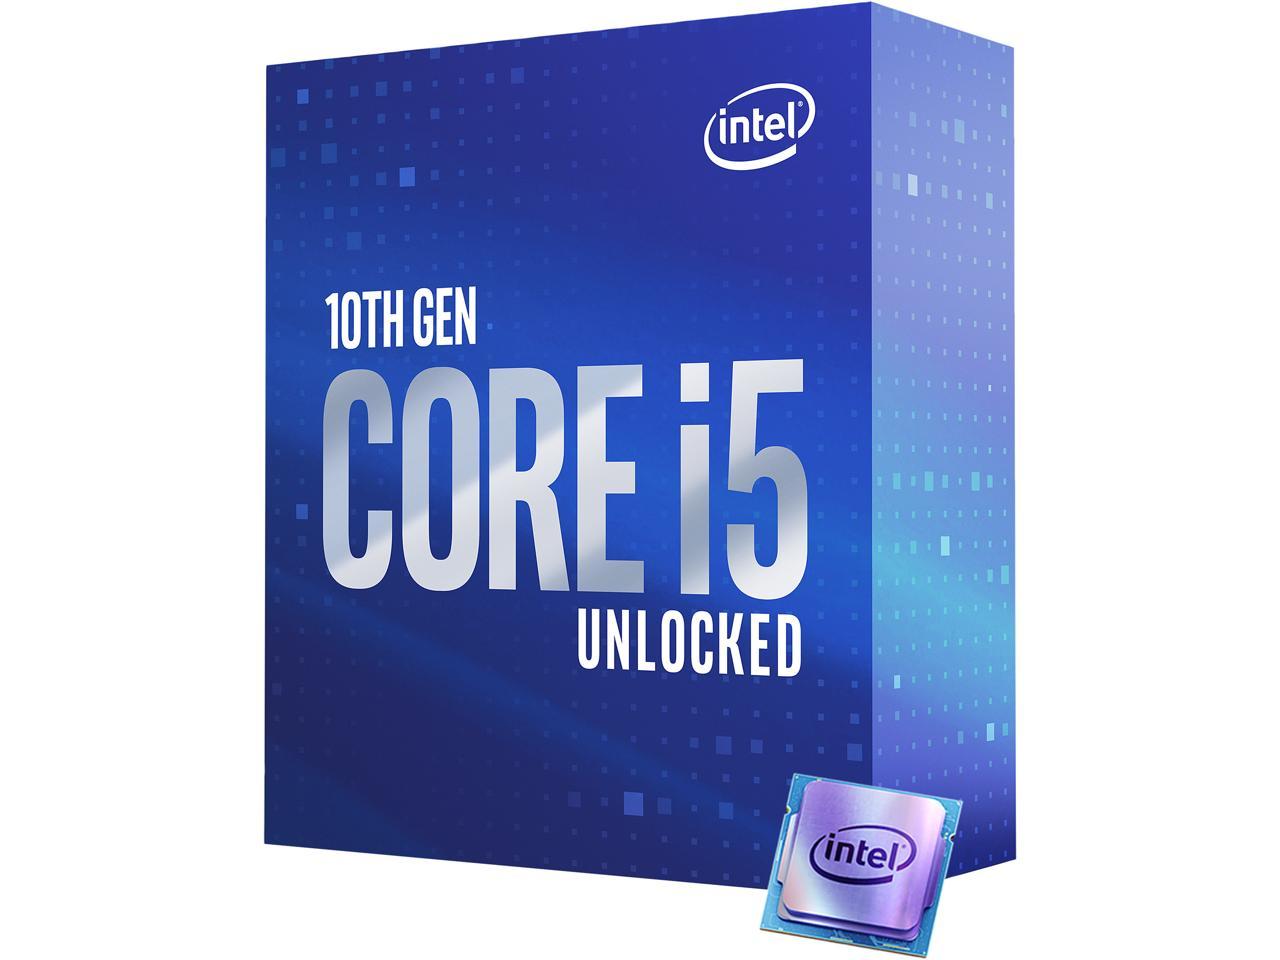 Intel Core i5-10600K Processor Comet Lake 6-core @Newegg $255